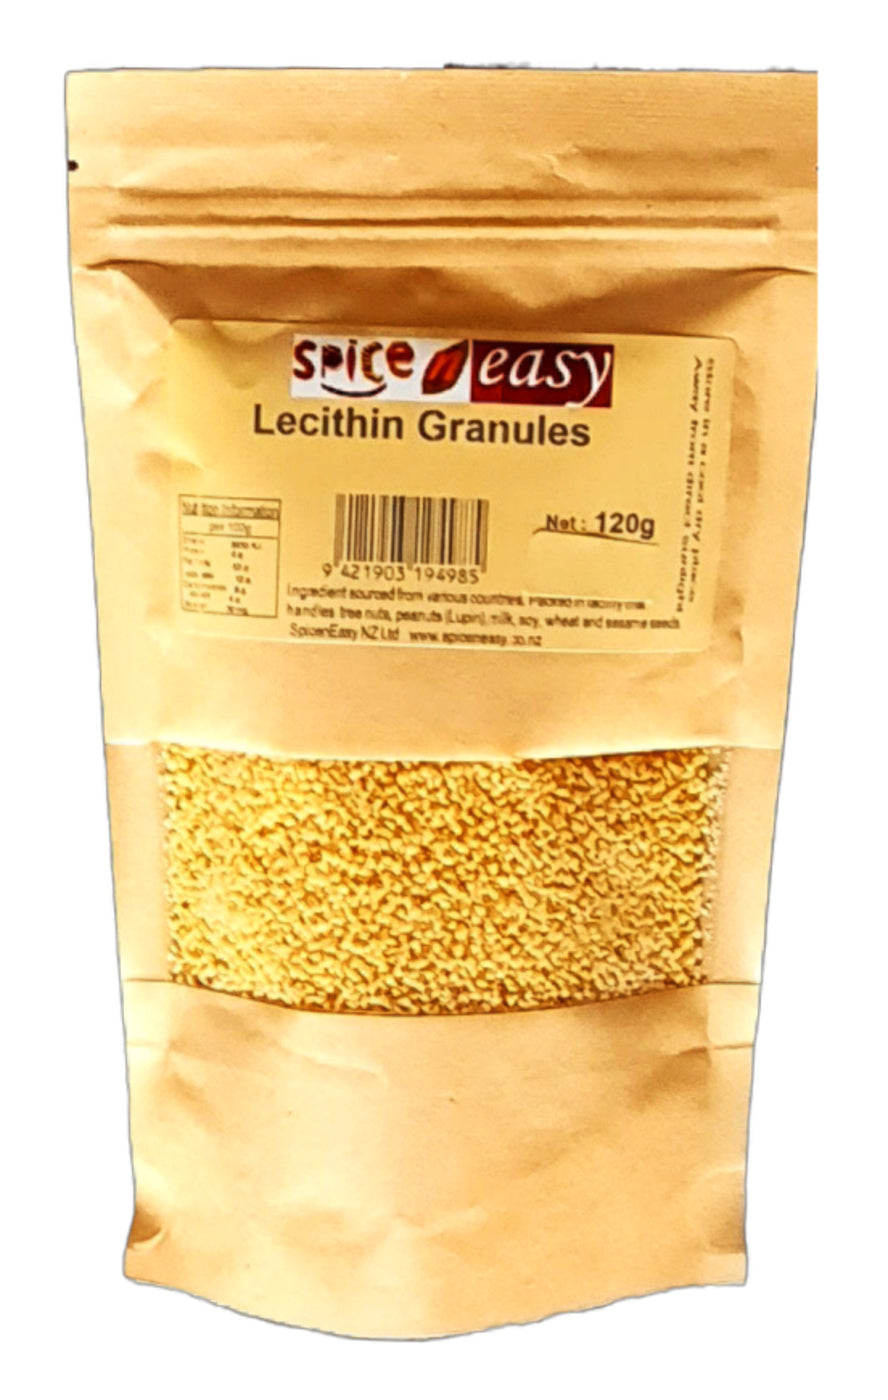 Spice N Easy - Lecithin Granules - [120g]